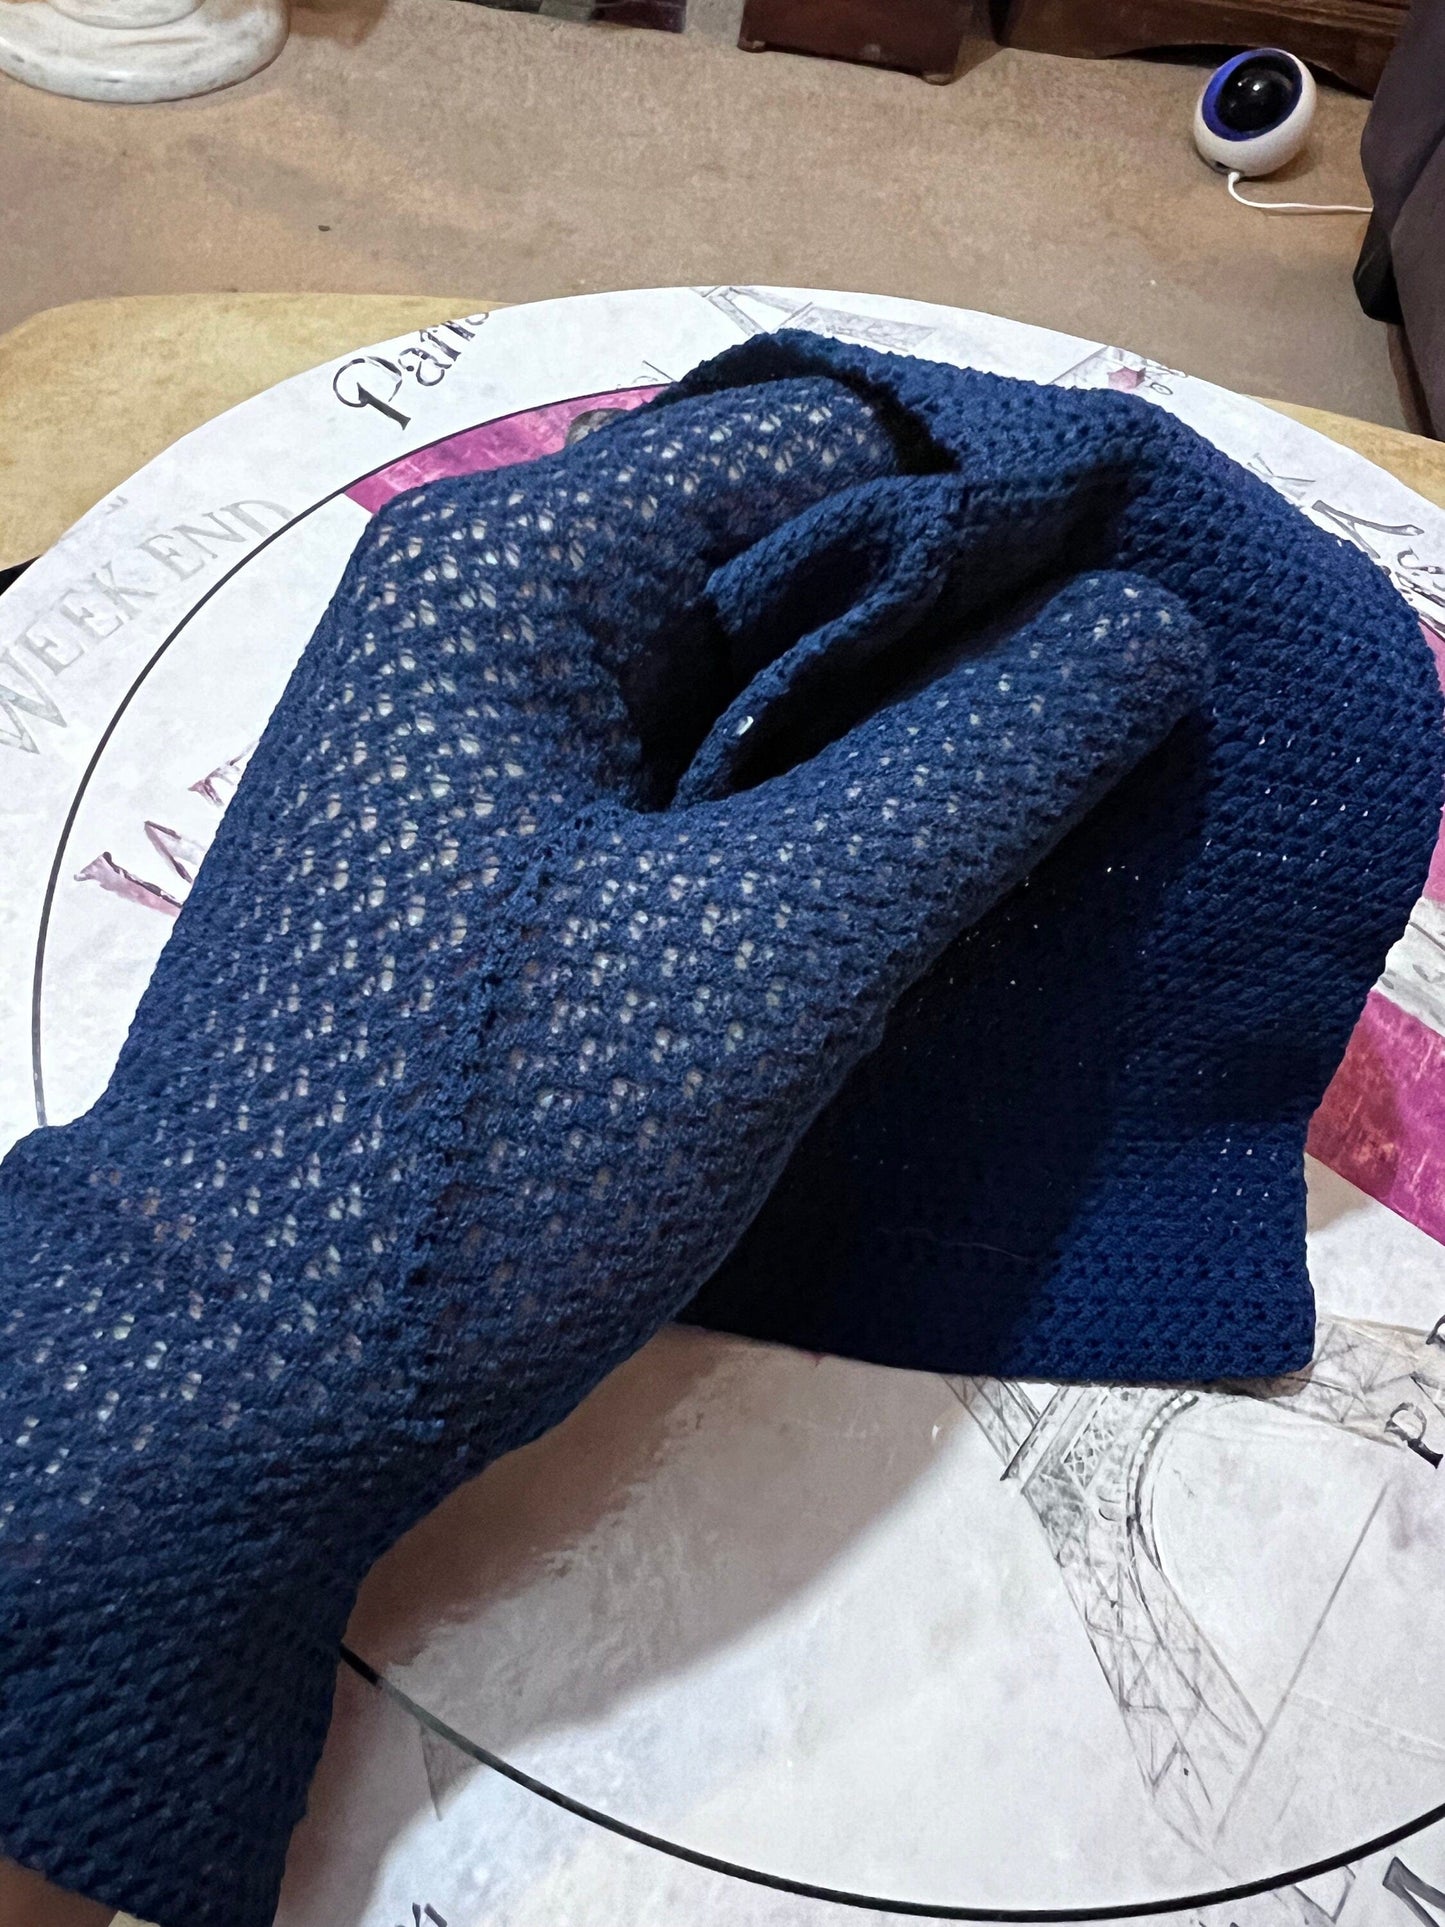 Vintage Ladies navy blue Stretch lace Gloves - lace  Style navy blue Gloves -  Size Small Gloves, Ladies Gloves, navy Gloves, lace gloves